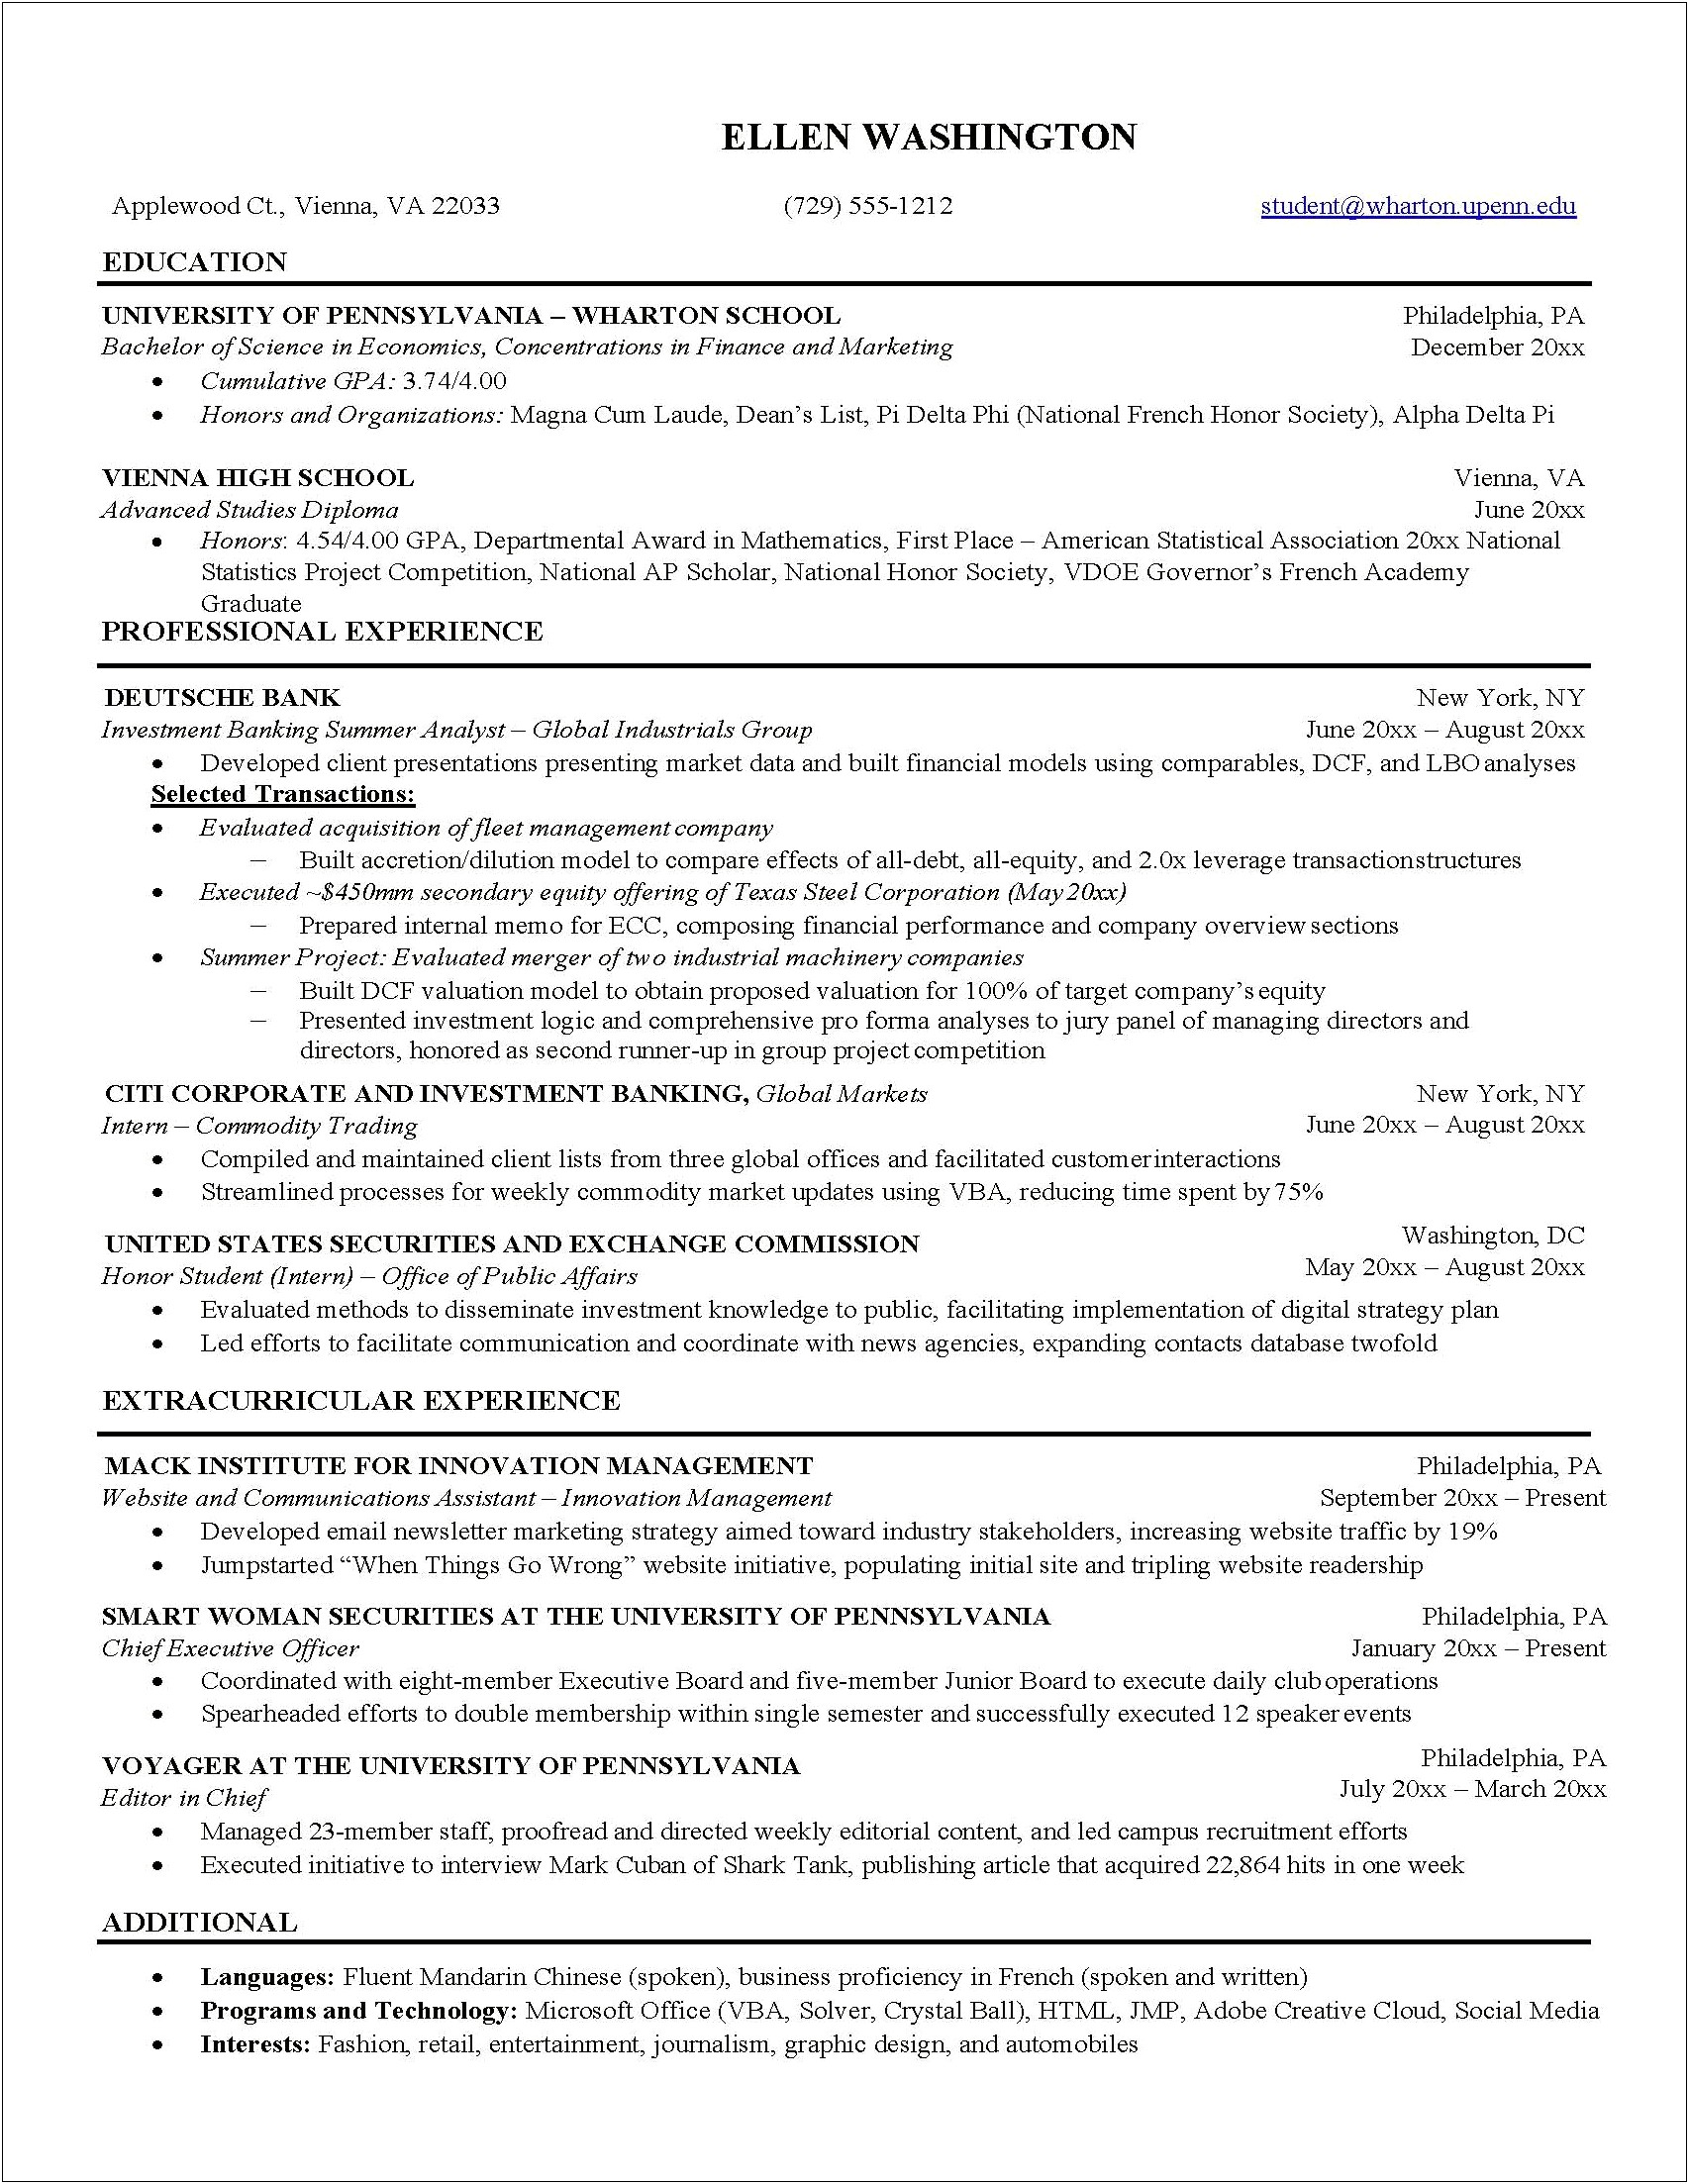 Resume Summary Statement For College Studetn